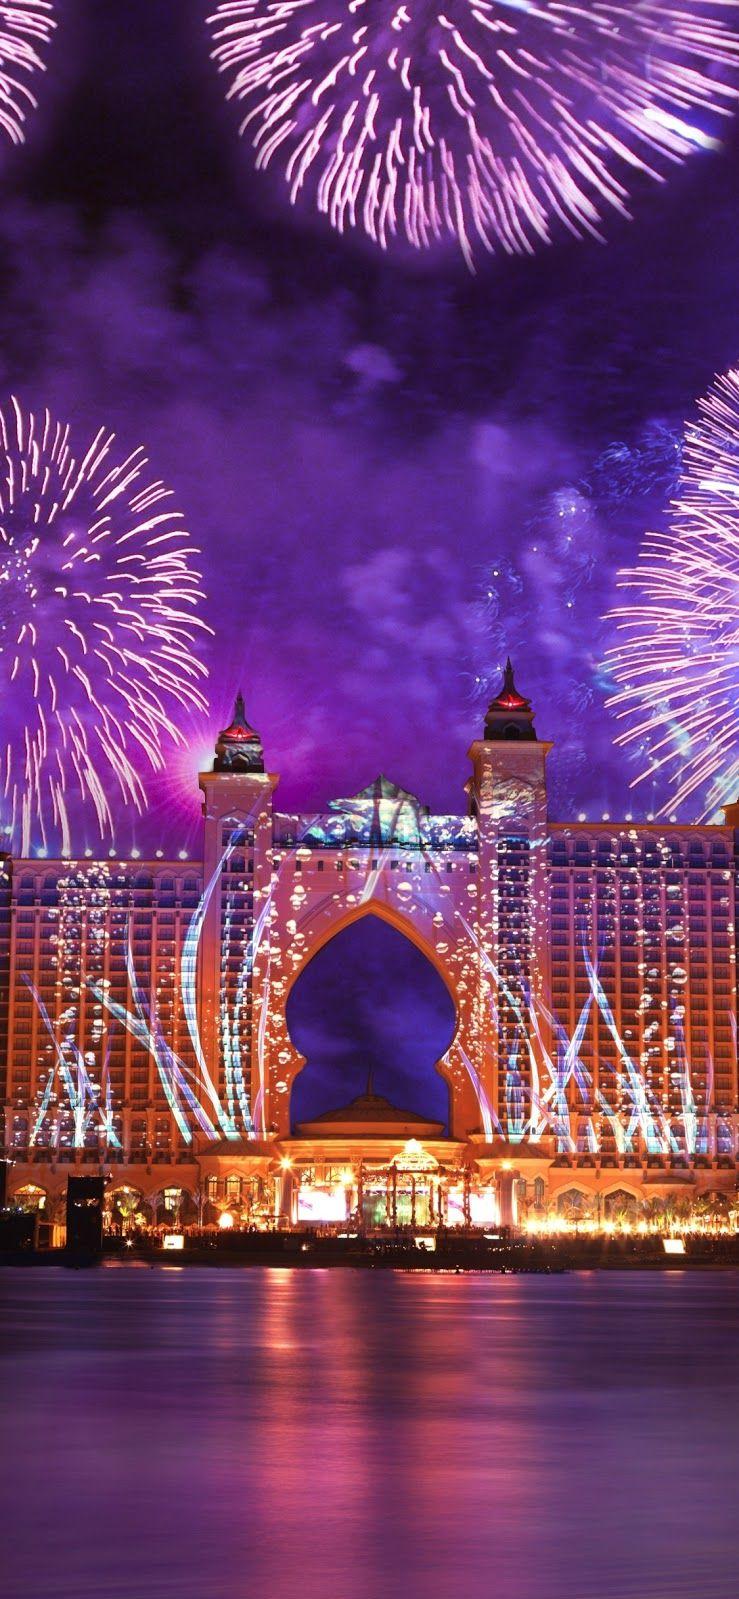 Atlantis Hotel Dubai Mobile Wallpaper Vacation Travel